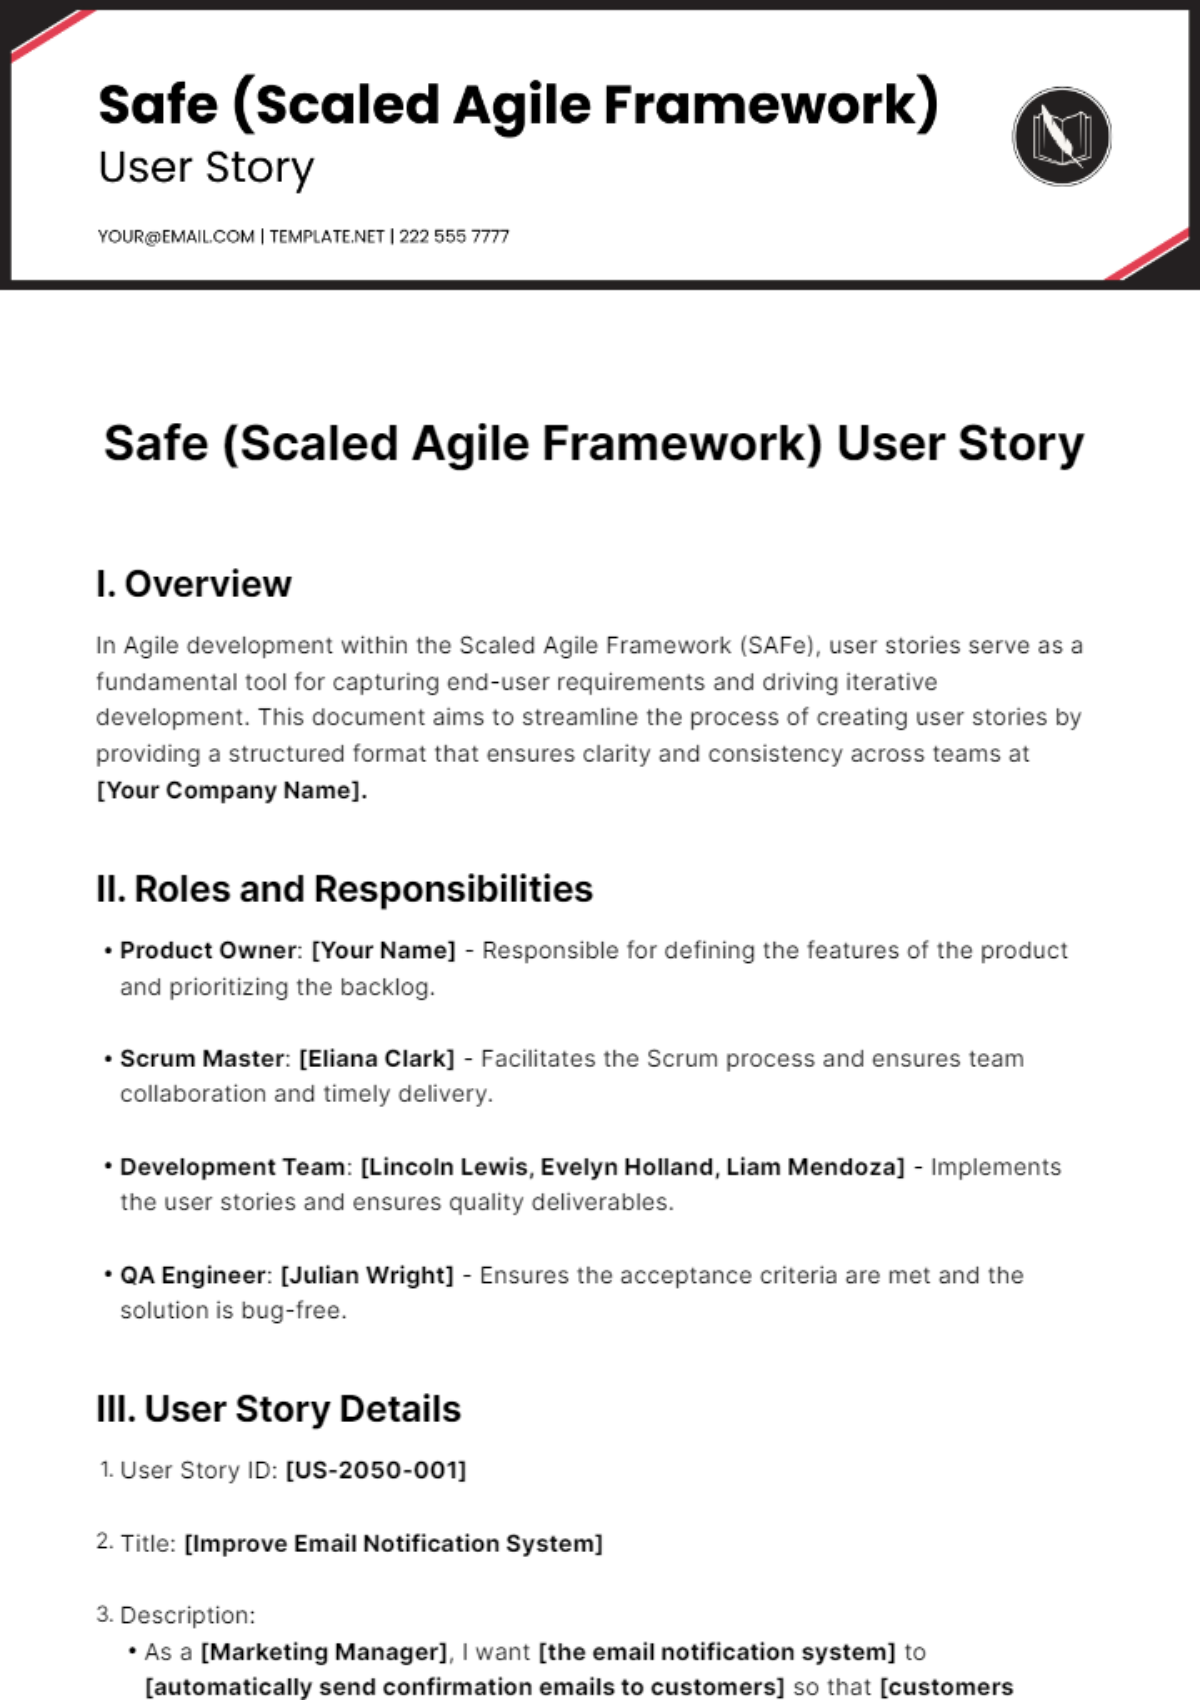 Free Safe (Scaled Agile Framework) User Story Template